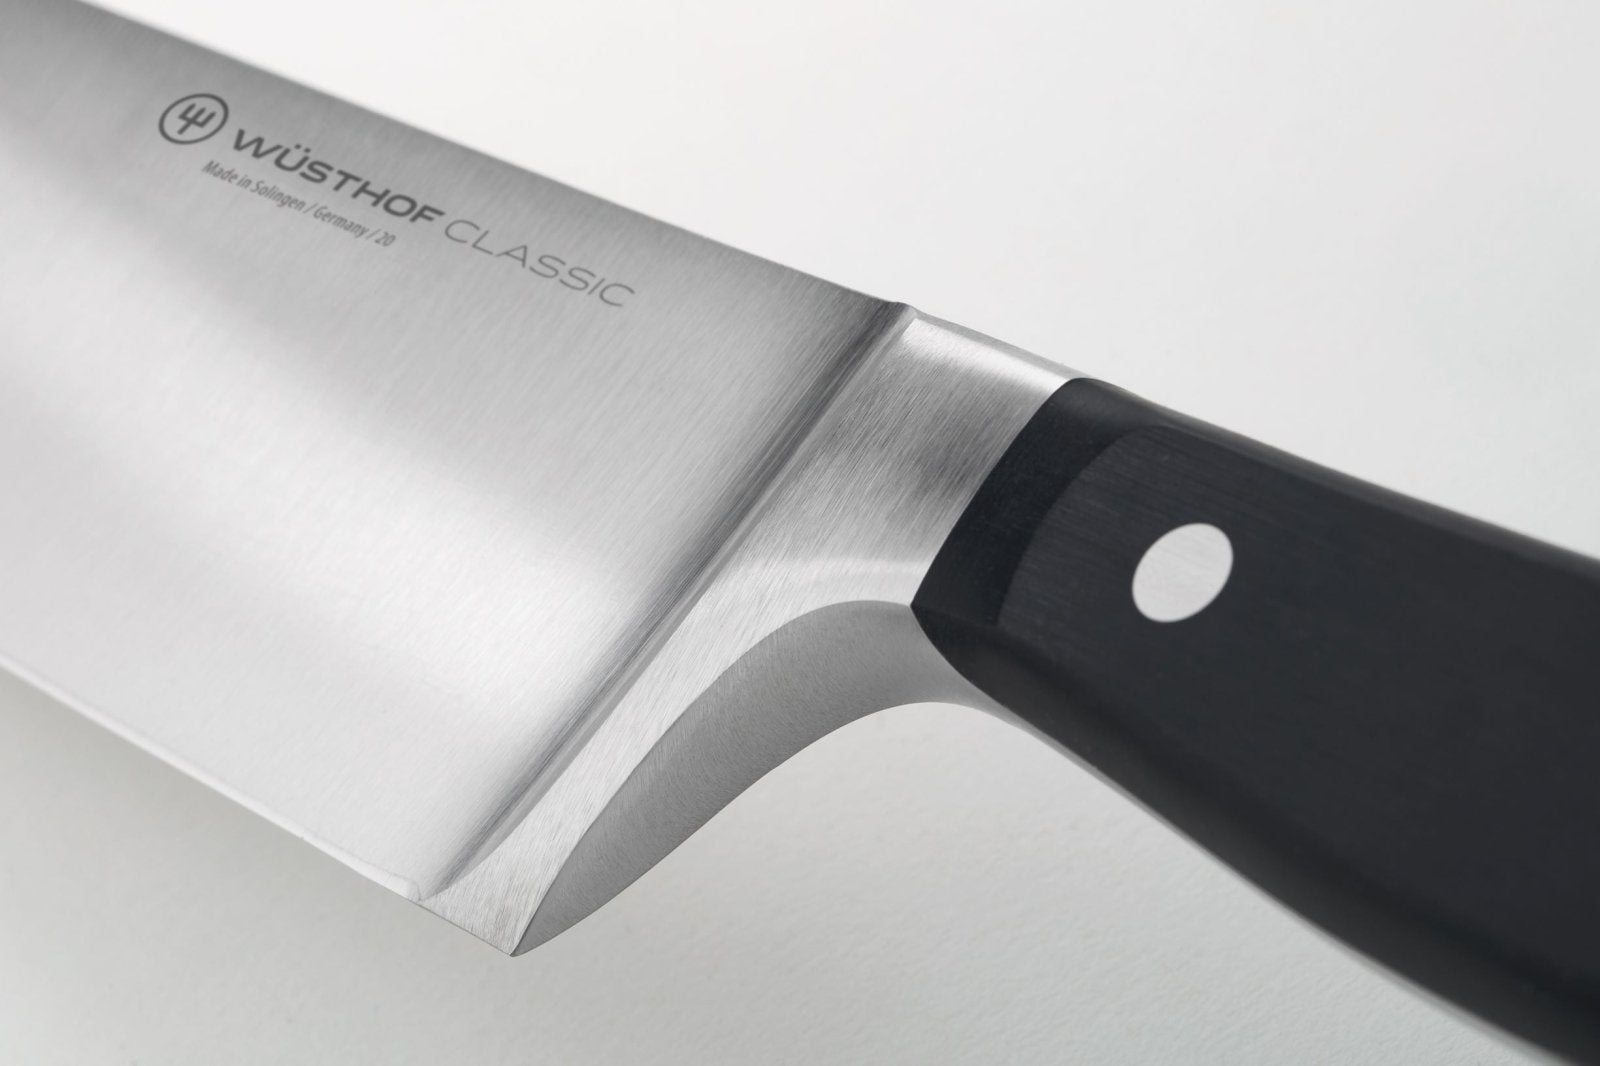 Wusthof Classic 2 Piece Santoku Knife Set - WT1120160201 - The Cotswold Knife Company